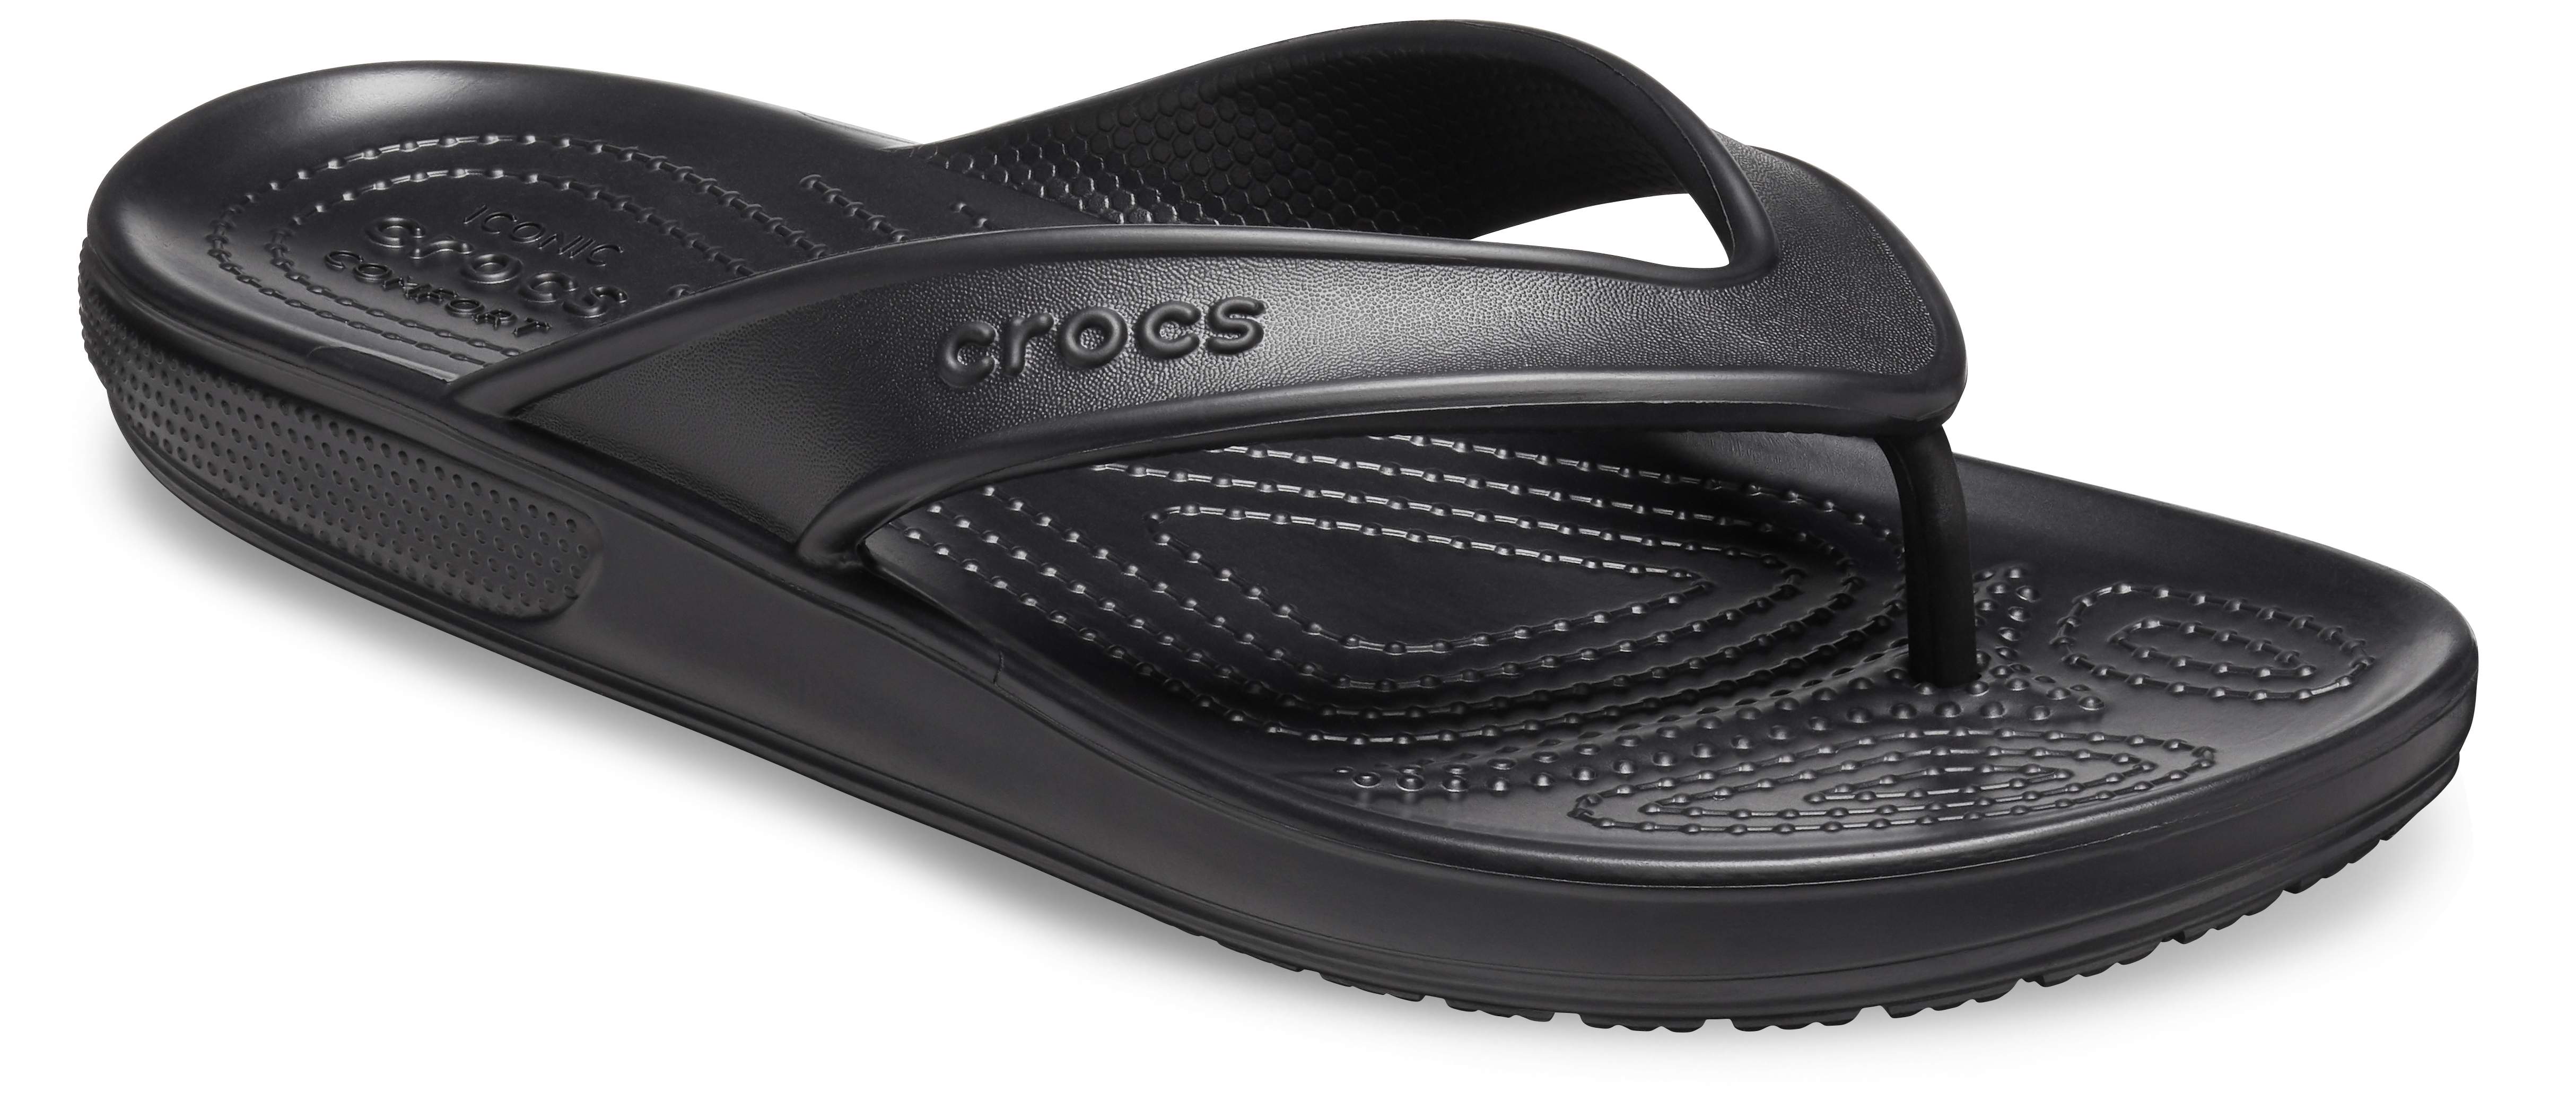 where can i buy croc flip flops